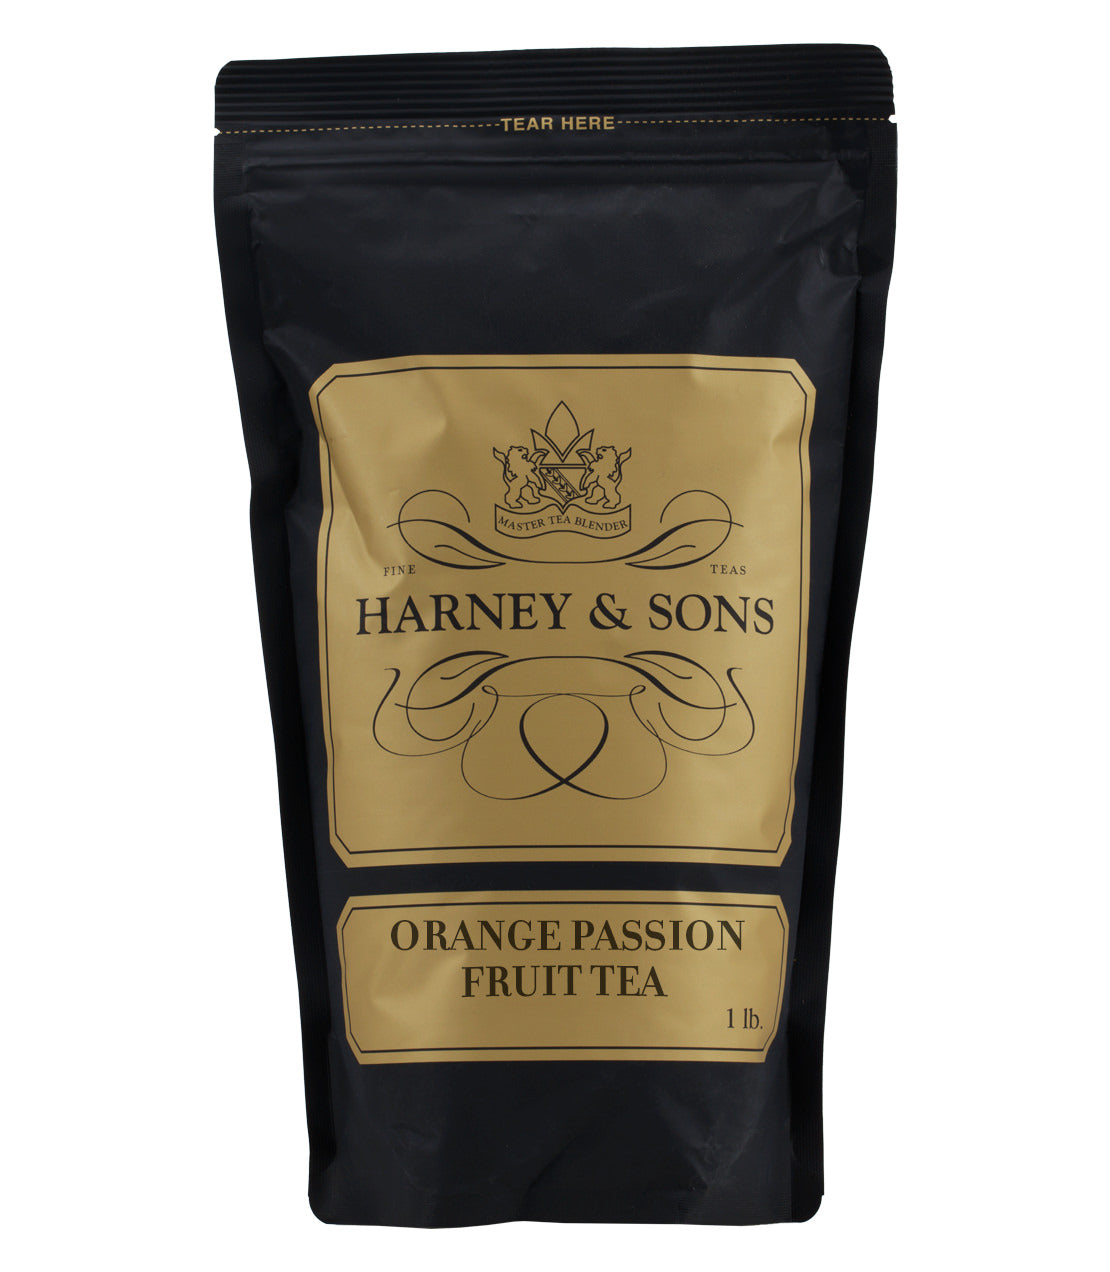 Orange Passion Fruit Tea - Loose 1 lb. Bag - Harney & Sons Fine Teas